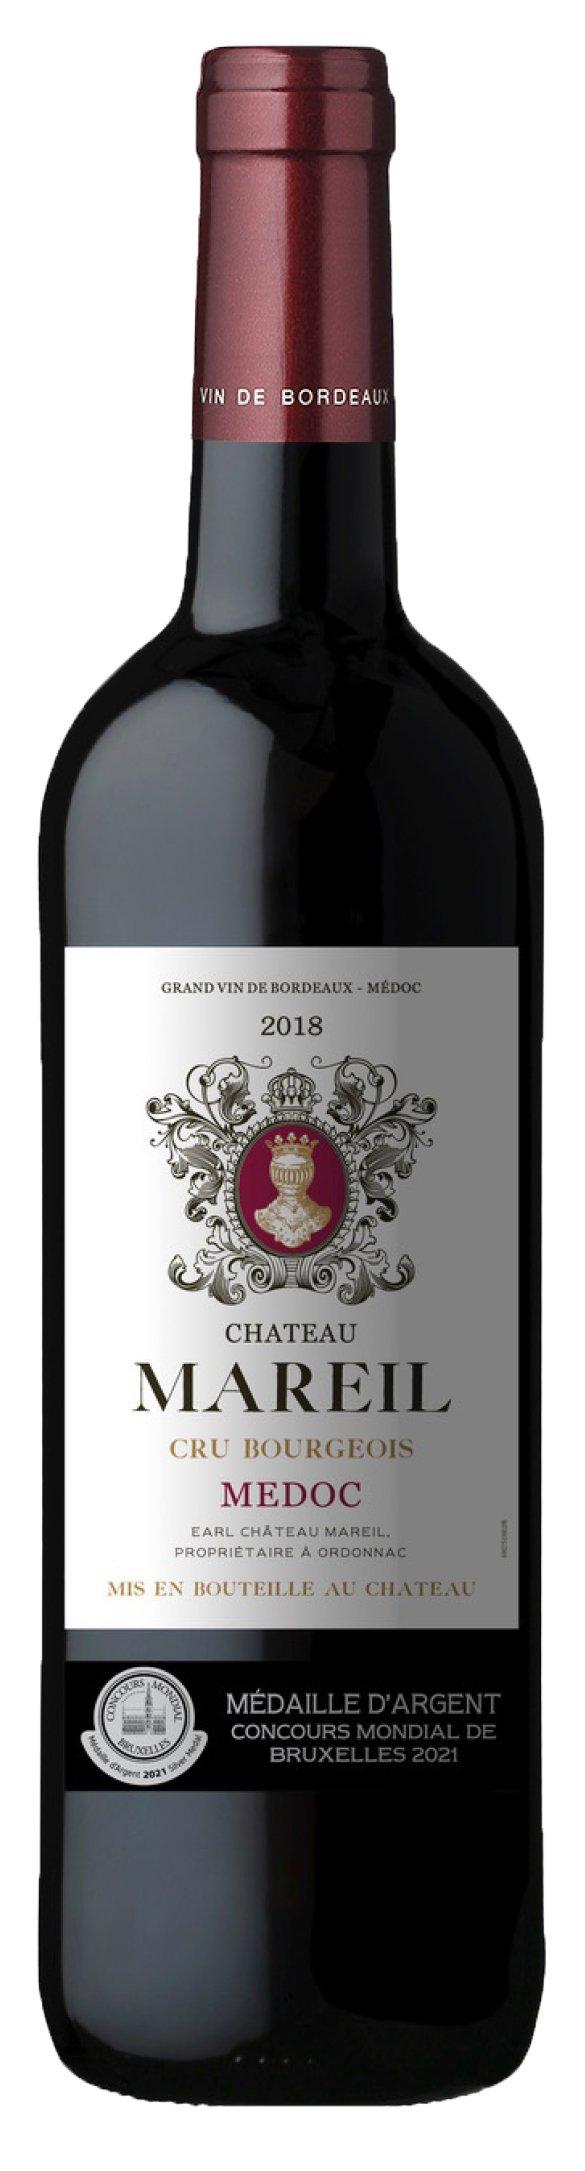 Chateau Mareil 2018 Medoc, Cru Express Bourgeois Wine 